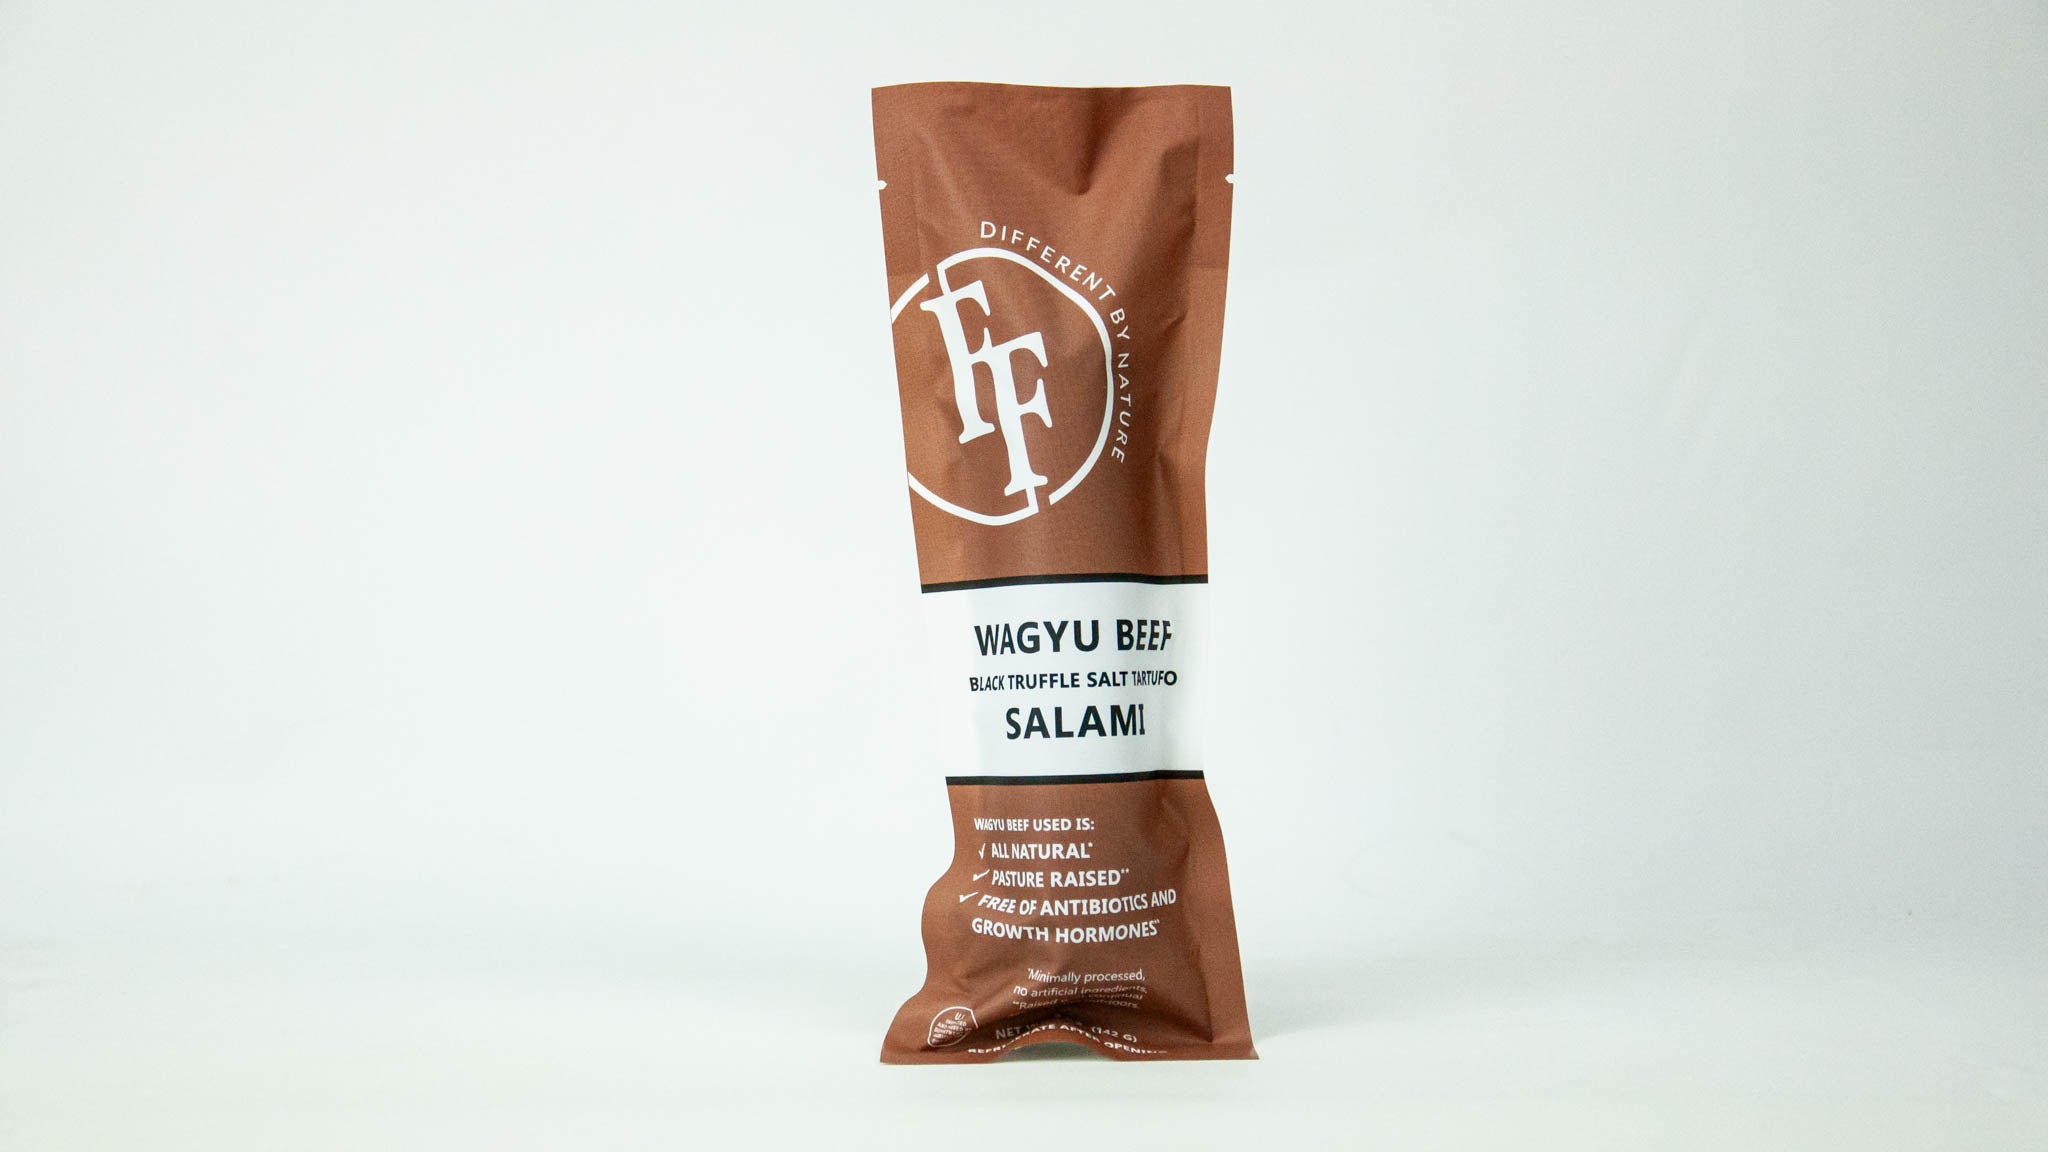 Wagyu Beef Black Truffle Salt Tartufo Salami